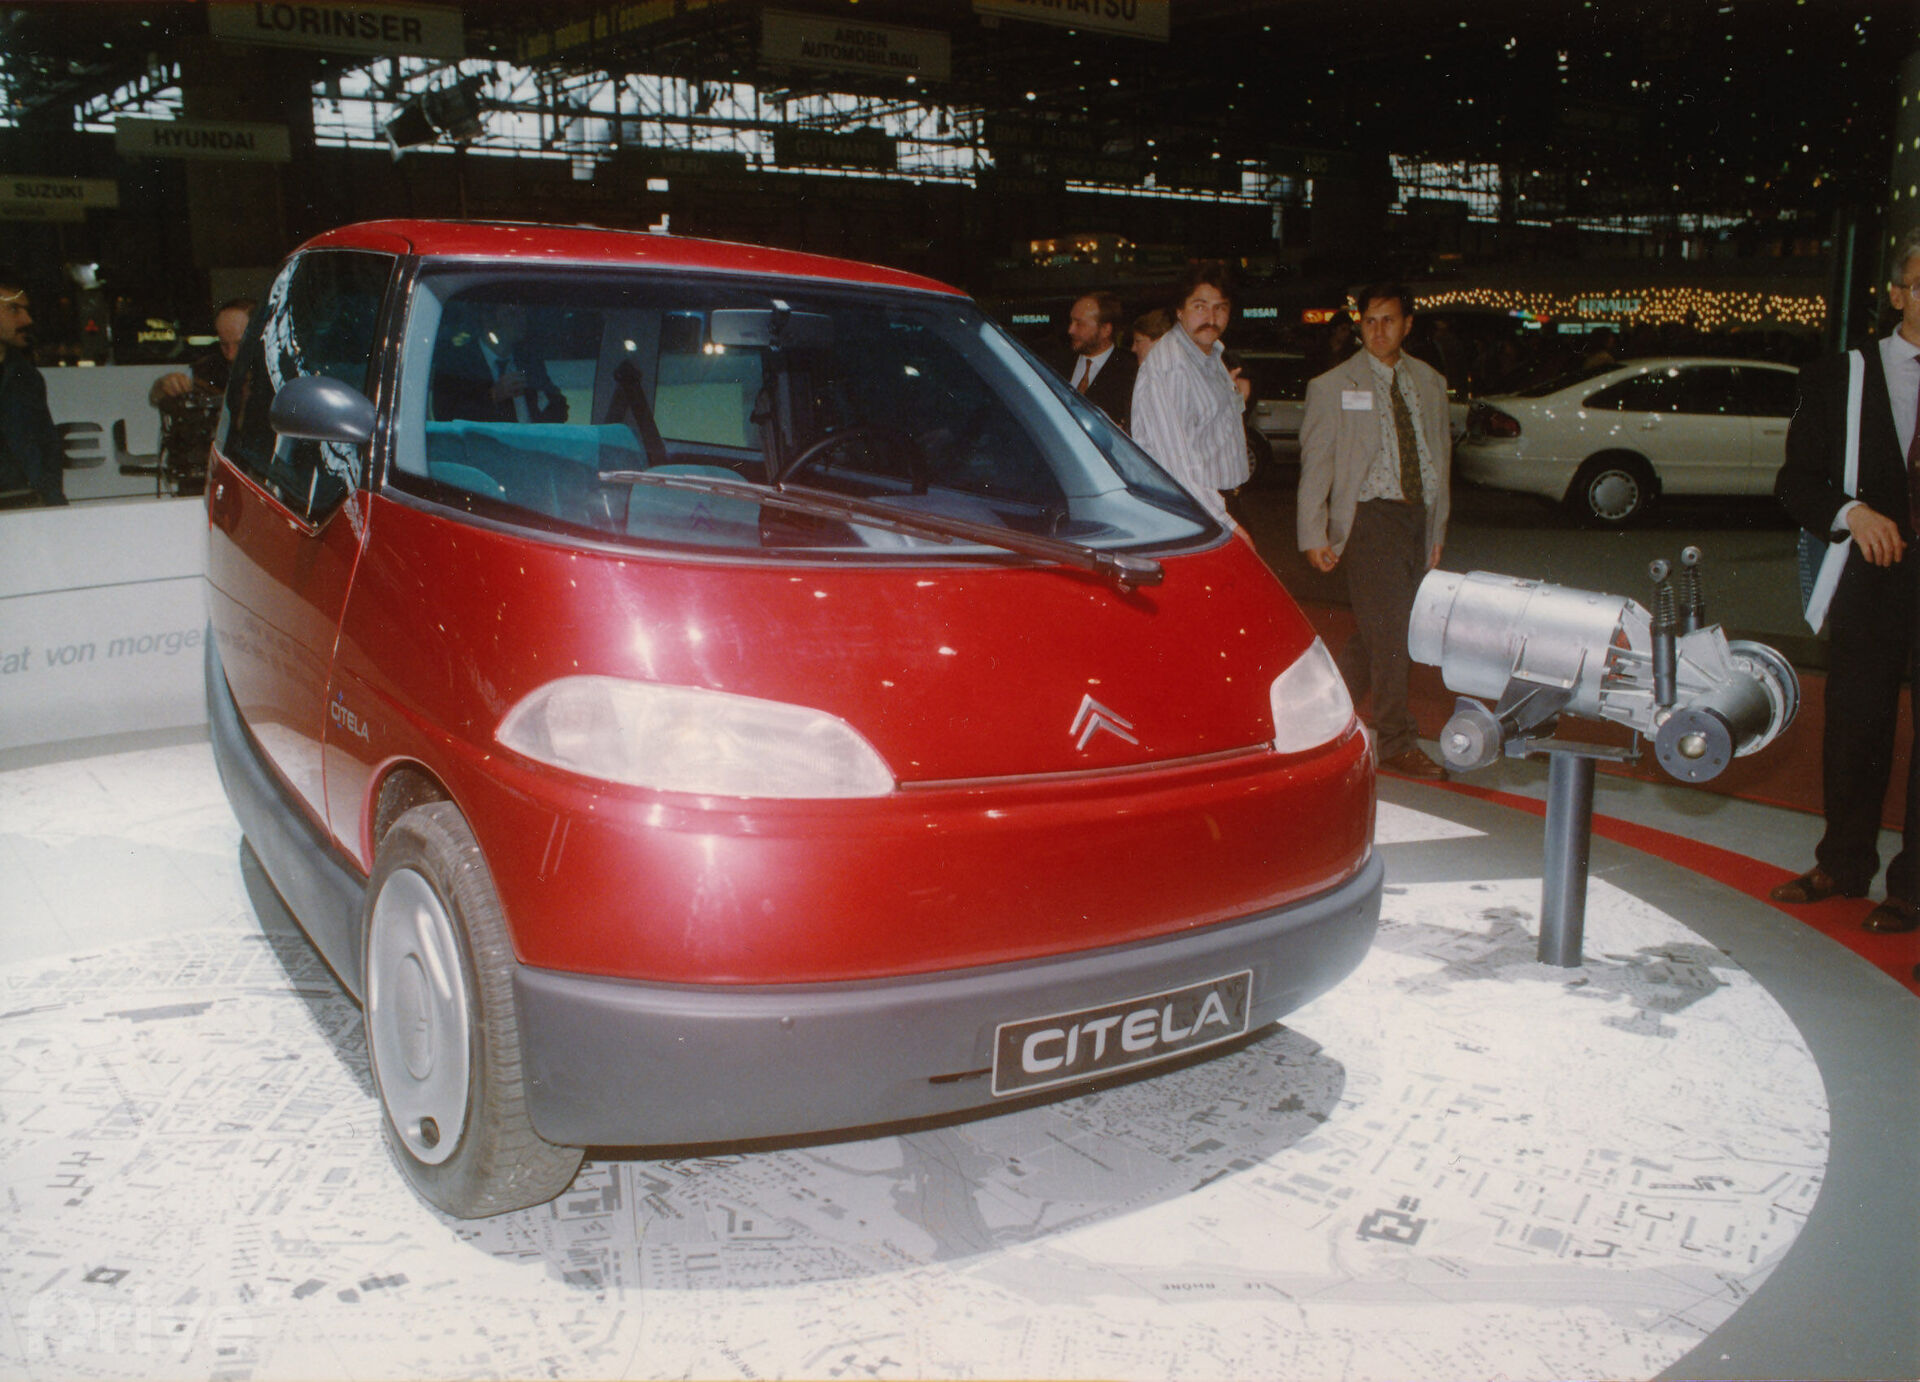 Citroën Citela